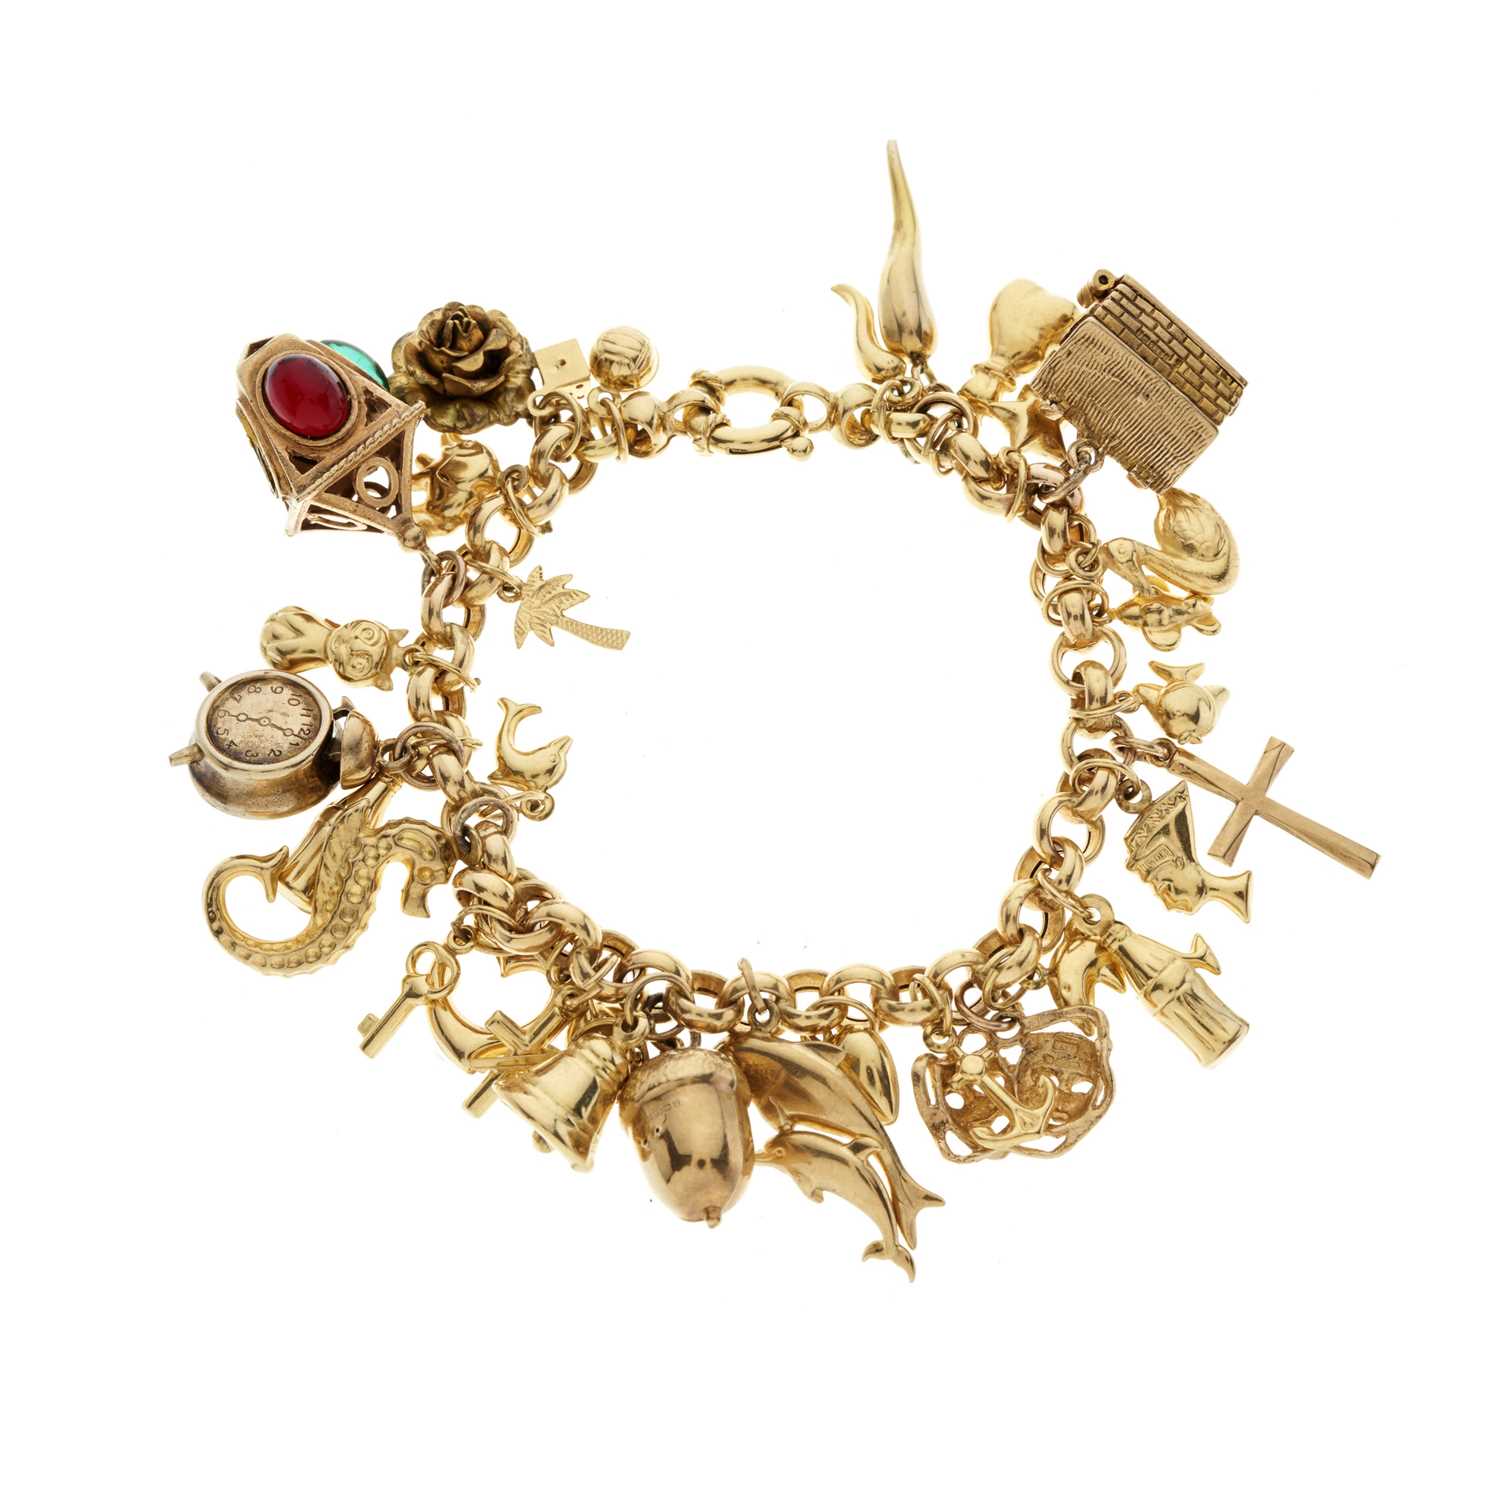 Lot 42 - A 9ct gold charm bracelet